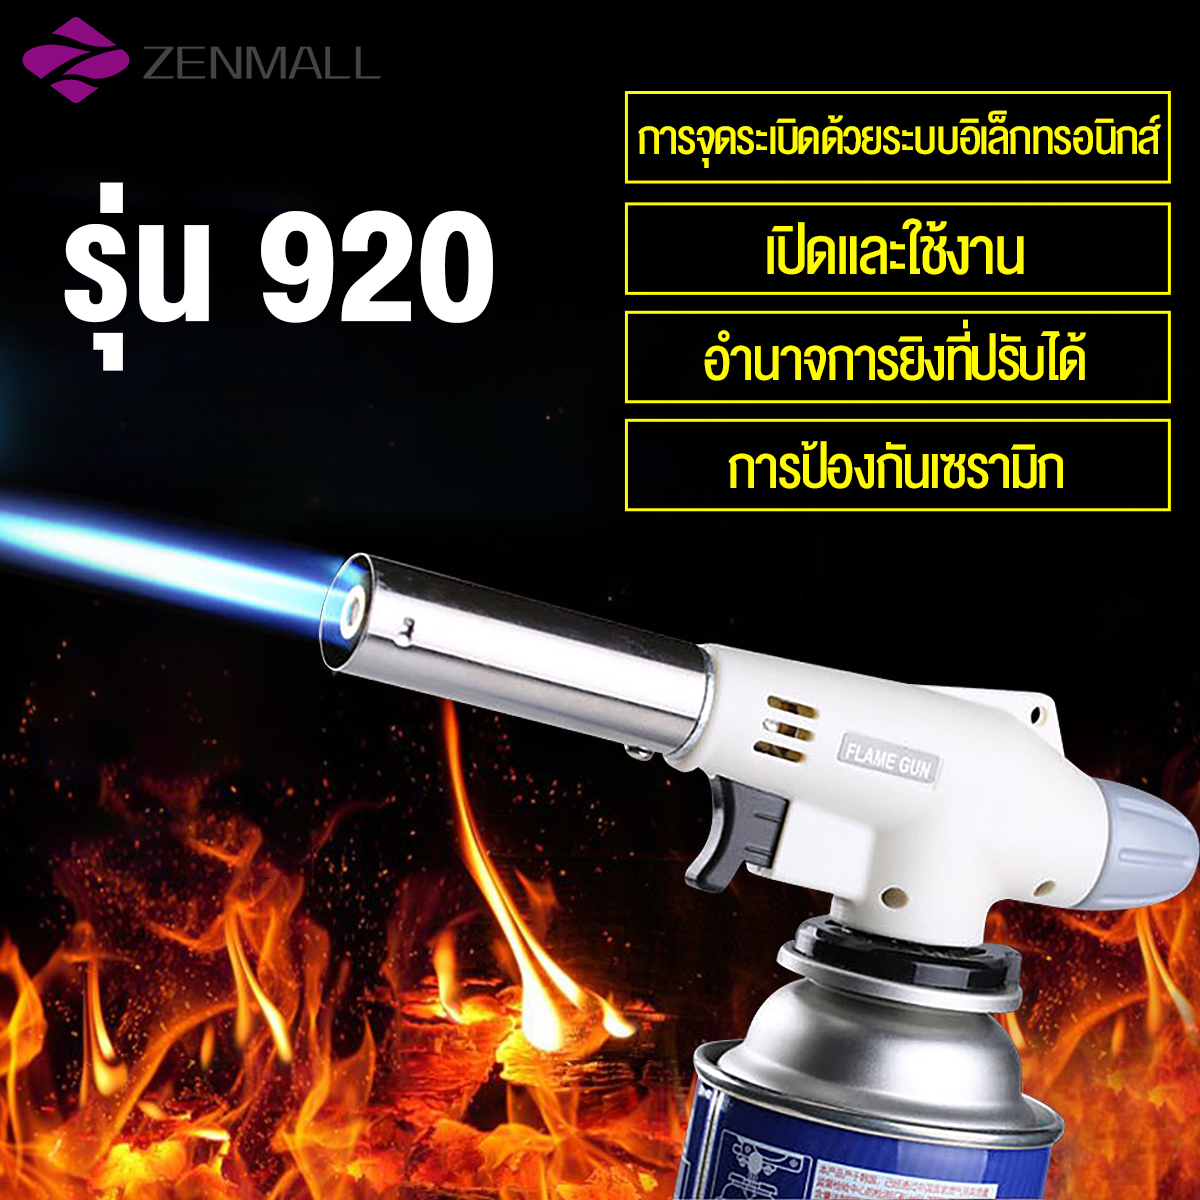 Zenmall หัวพ่นไฟ หัวพ่นไฟแก๊ส 920 หัวพ่นไฟ เผาขน ใช้ในงานช่างต่างๆอุปกรณ์เดินป่าหรือตั้งแคมป์ใช้กับแก๊สกระป๋อง ทนความร้อนได้ถึง 1300 องศา